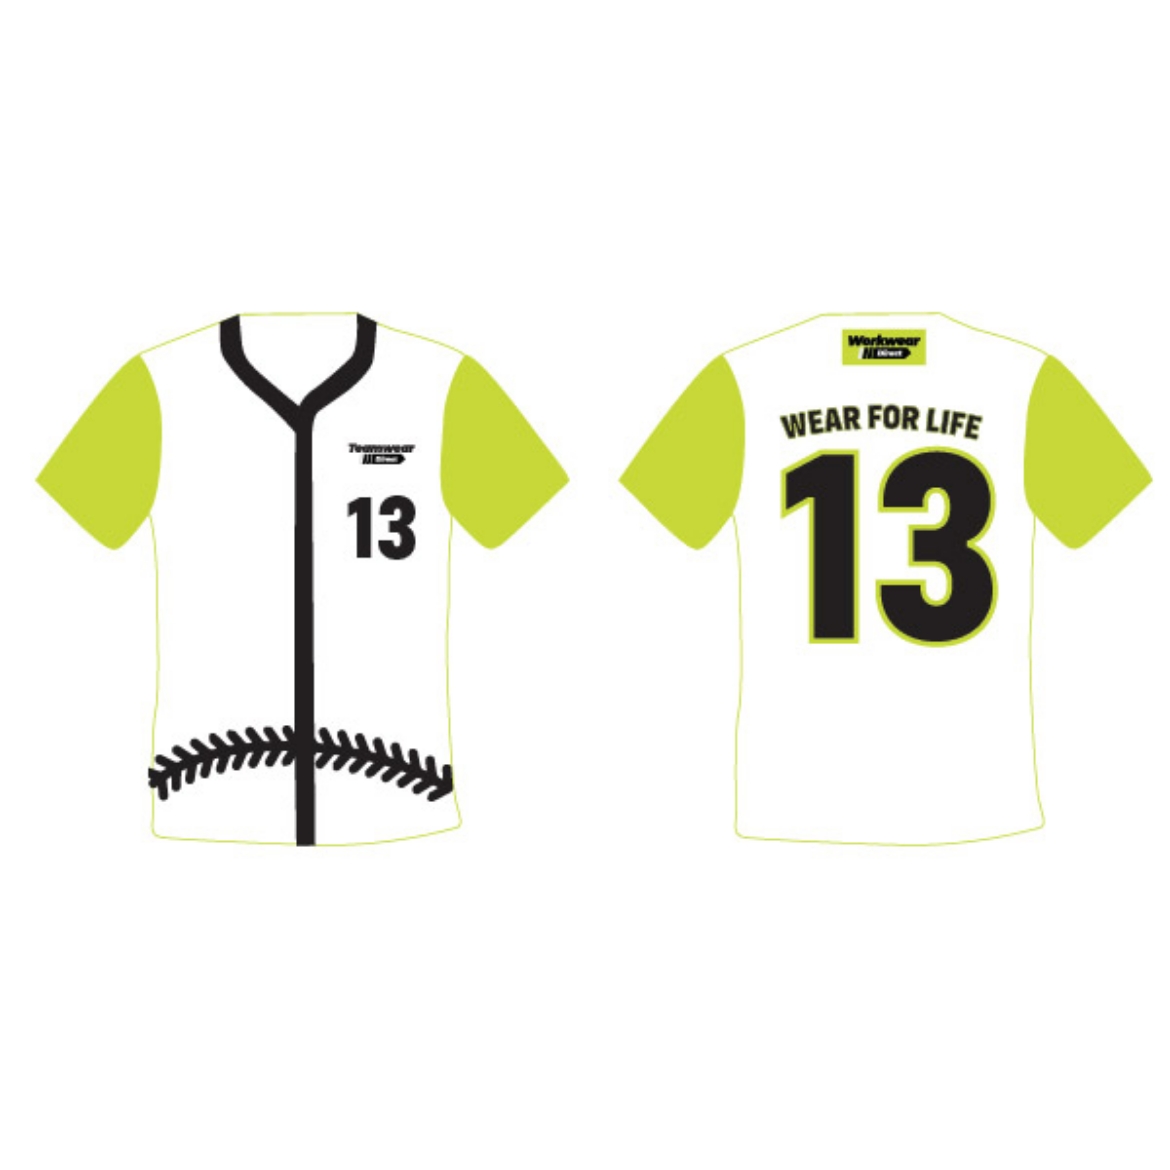 Picture of Teamwear Direct Baseball Jersey